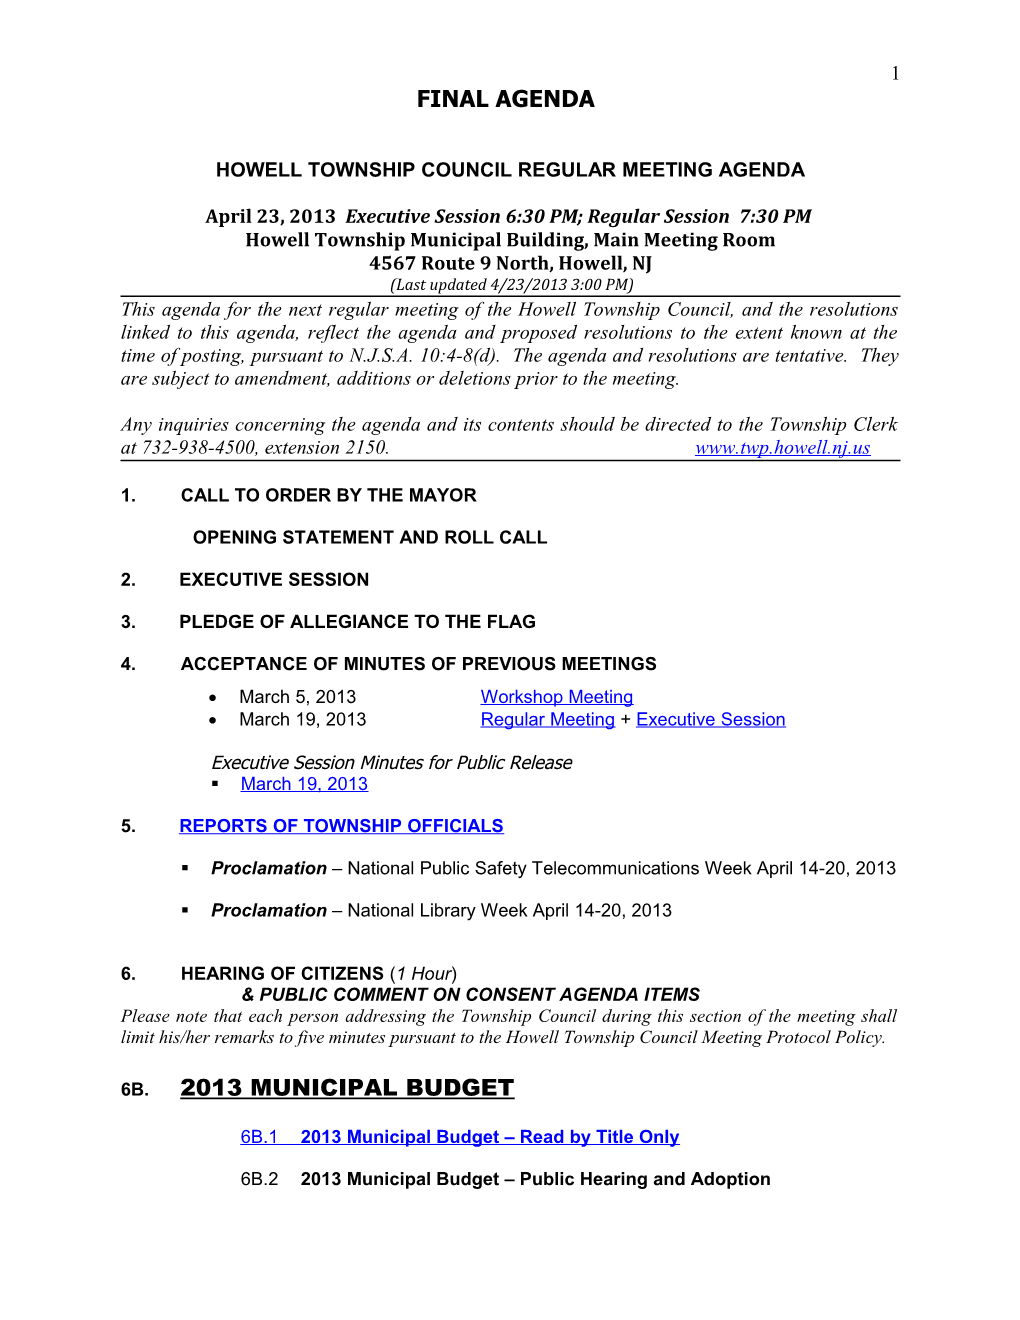 Howell Township Council Workshop/Regular Meeting Agenda